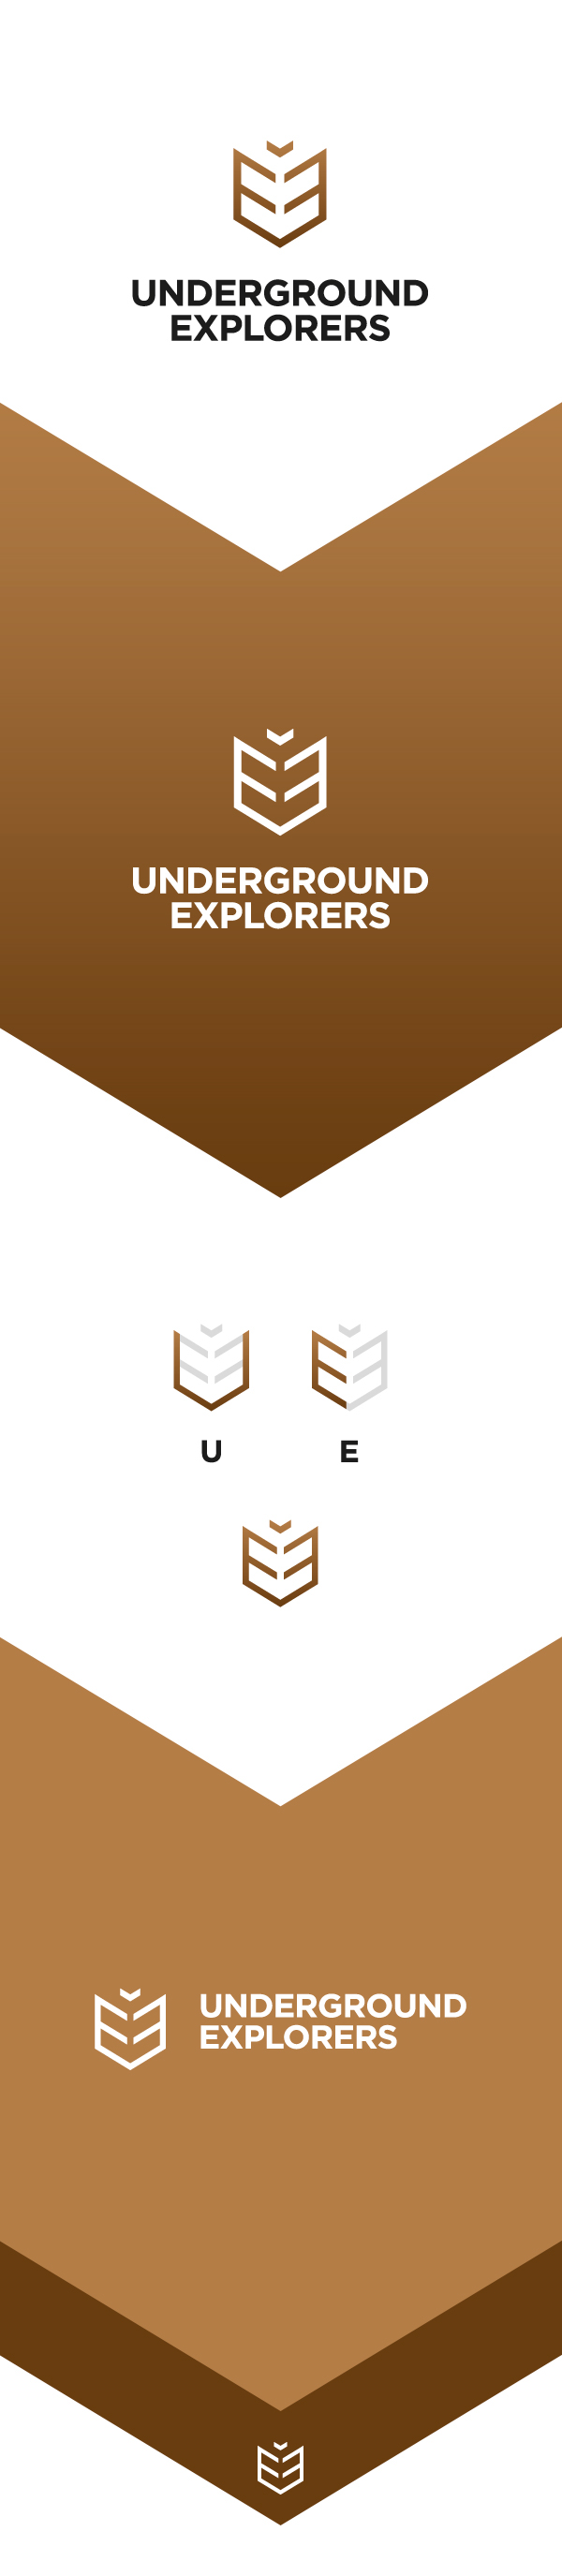 JDesign JDesign06 logo corporat identity Logotype